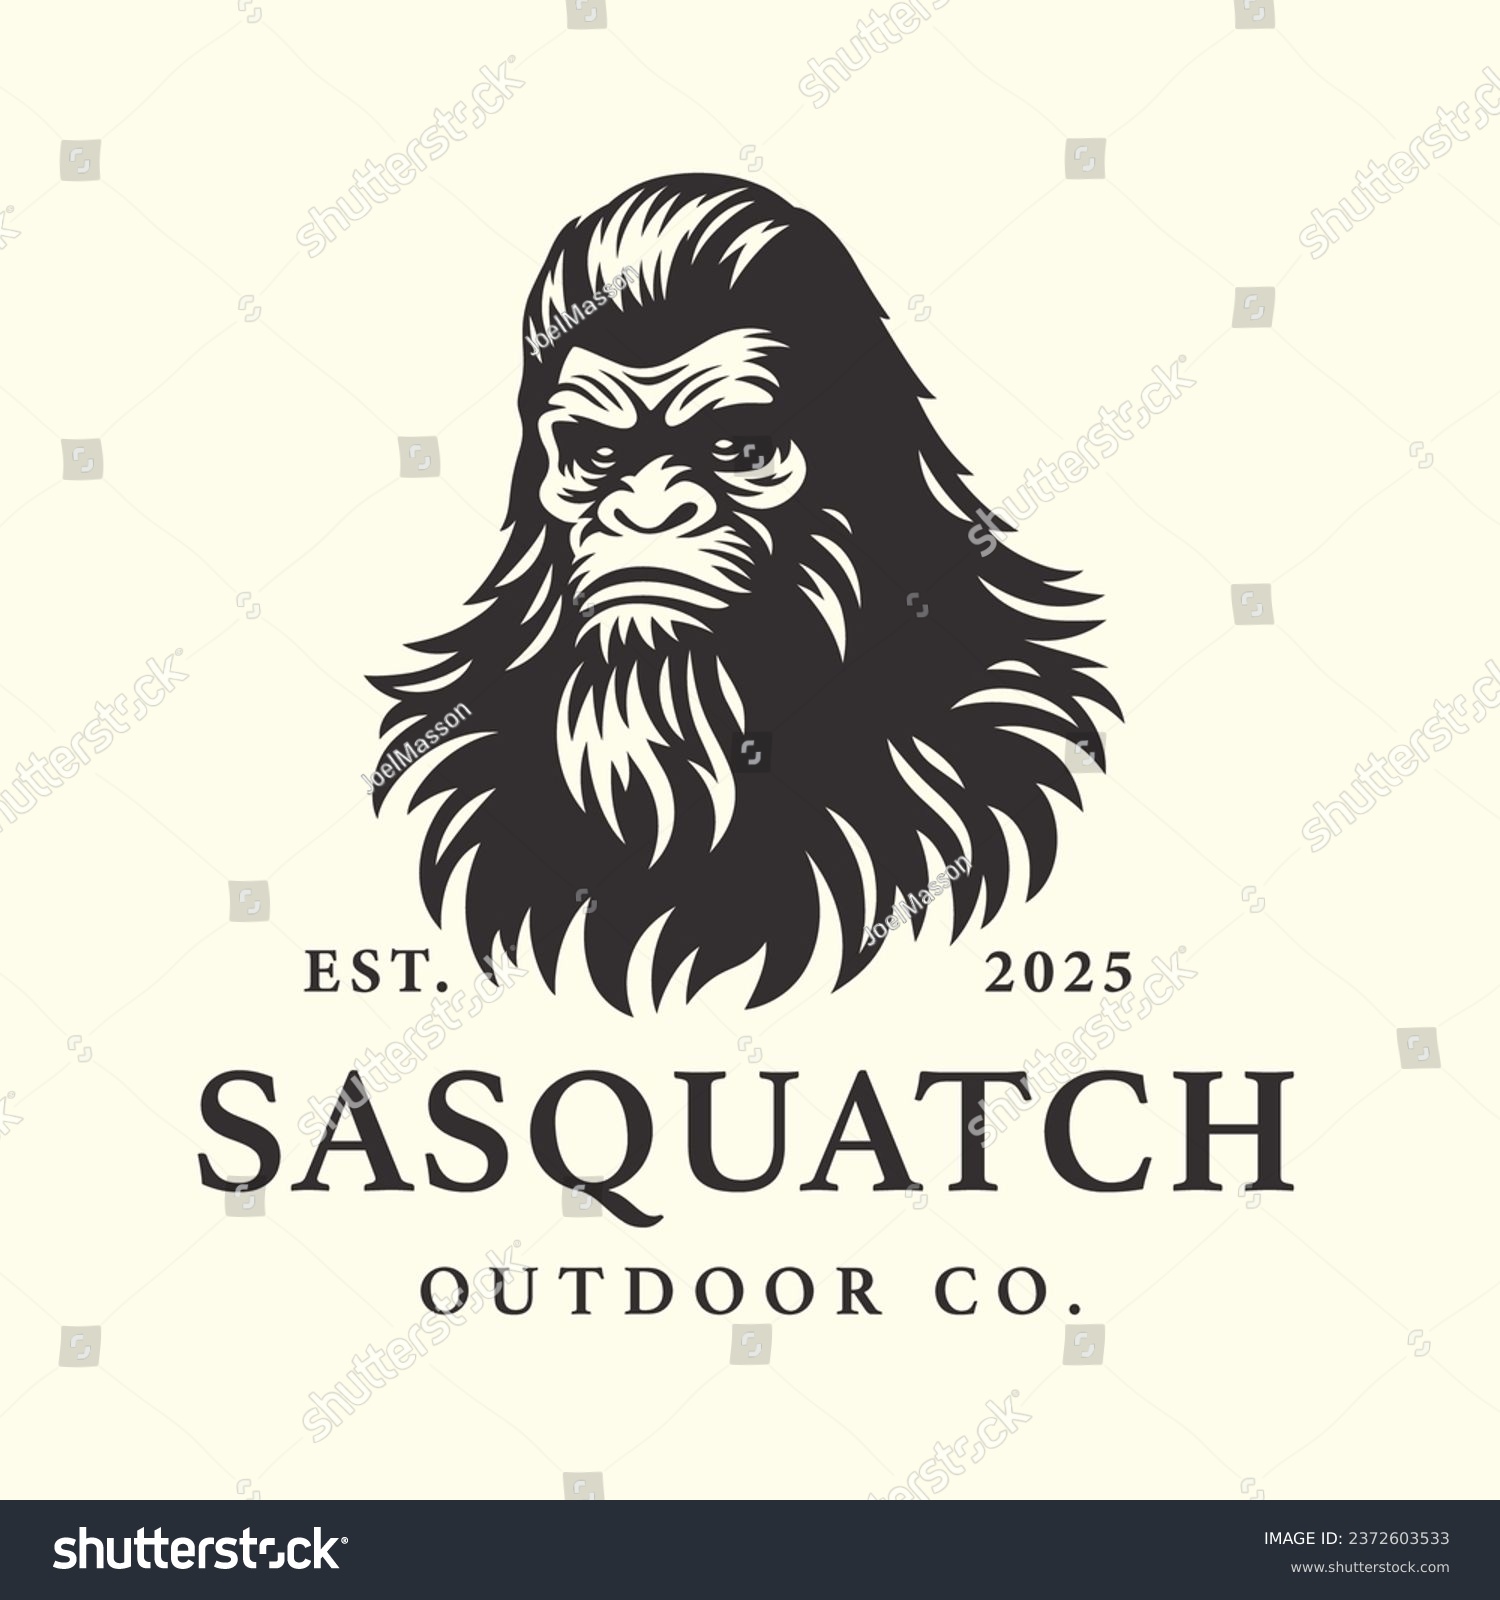 SVG of Squatchy bigfoot logo design. Sasquatch face brand icon. Yeti symbol. Wood ape emblem. Mythical cryptid creature vector illustration. svg